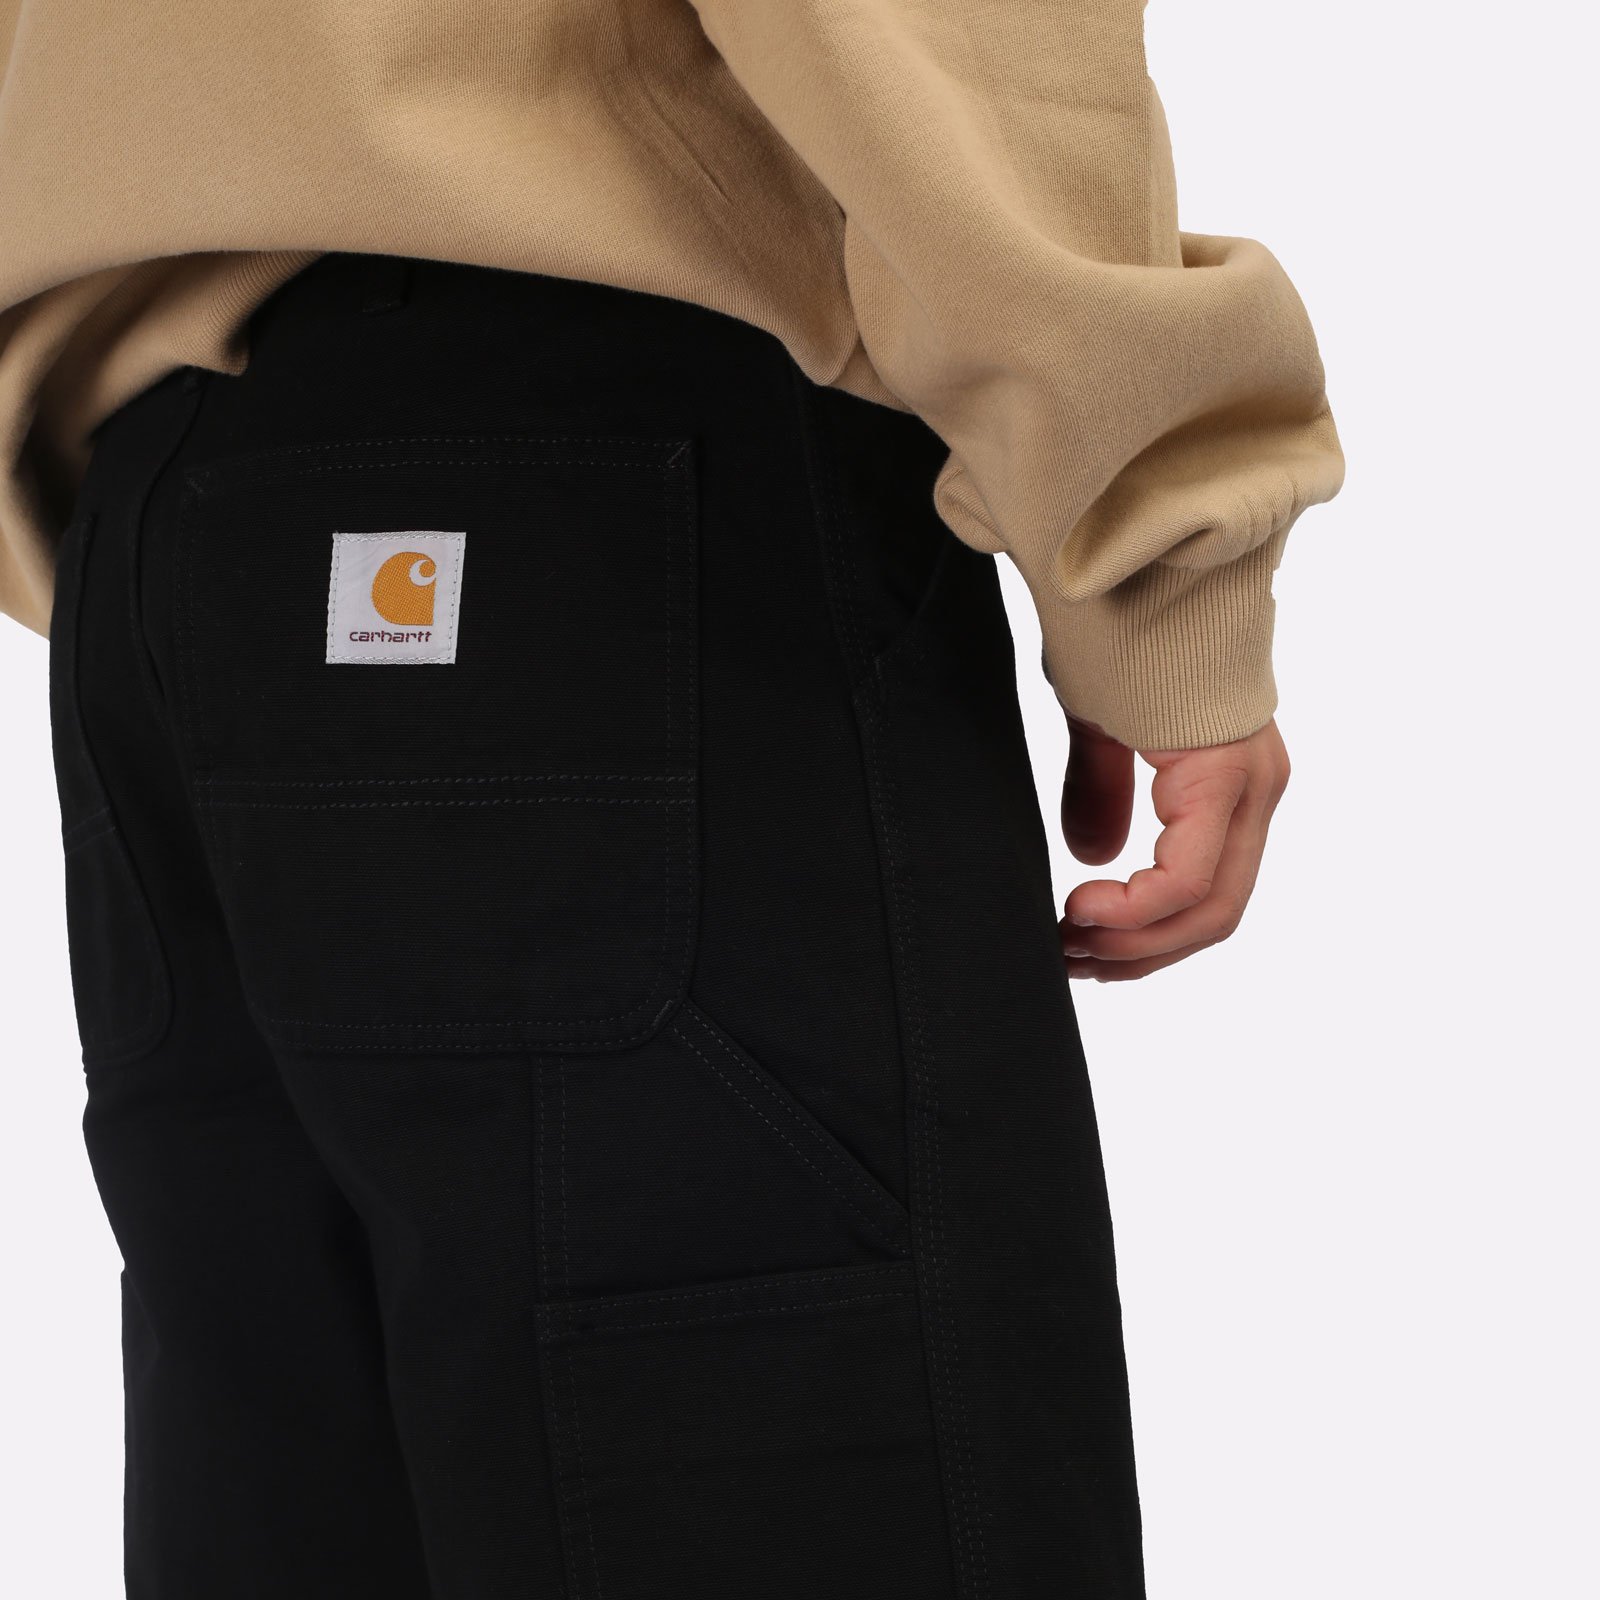 мужские шорты Carhartt WIP Single Knee Short  (I027942-black)  - цена, описание, фото 5